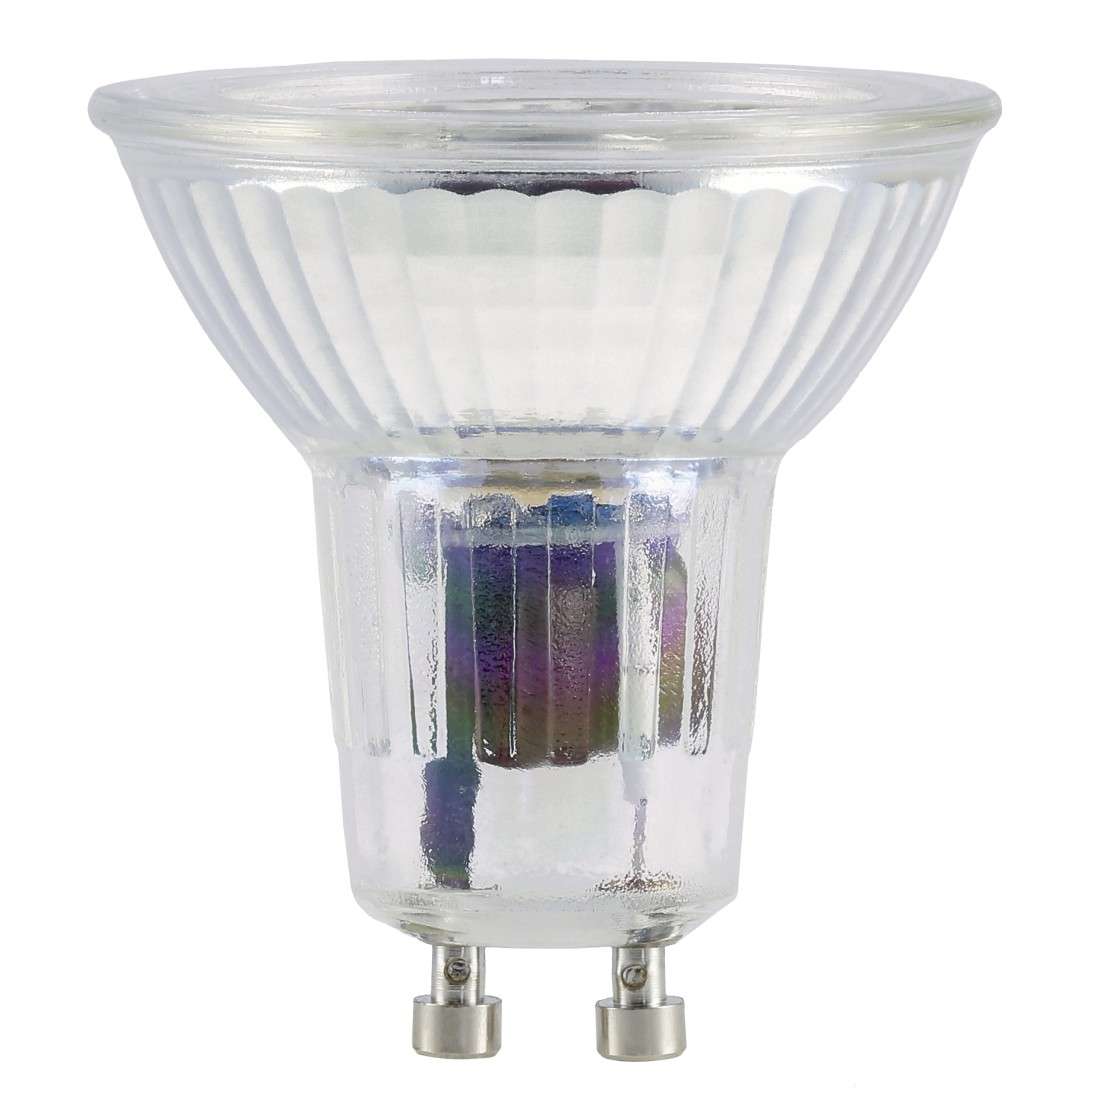 XAVAX LED-Lampe, GU10, 350lm ersetzt 50W, Refl. PAR16, Warmweiß, Glas, dimmbar